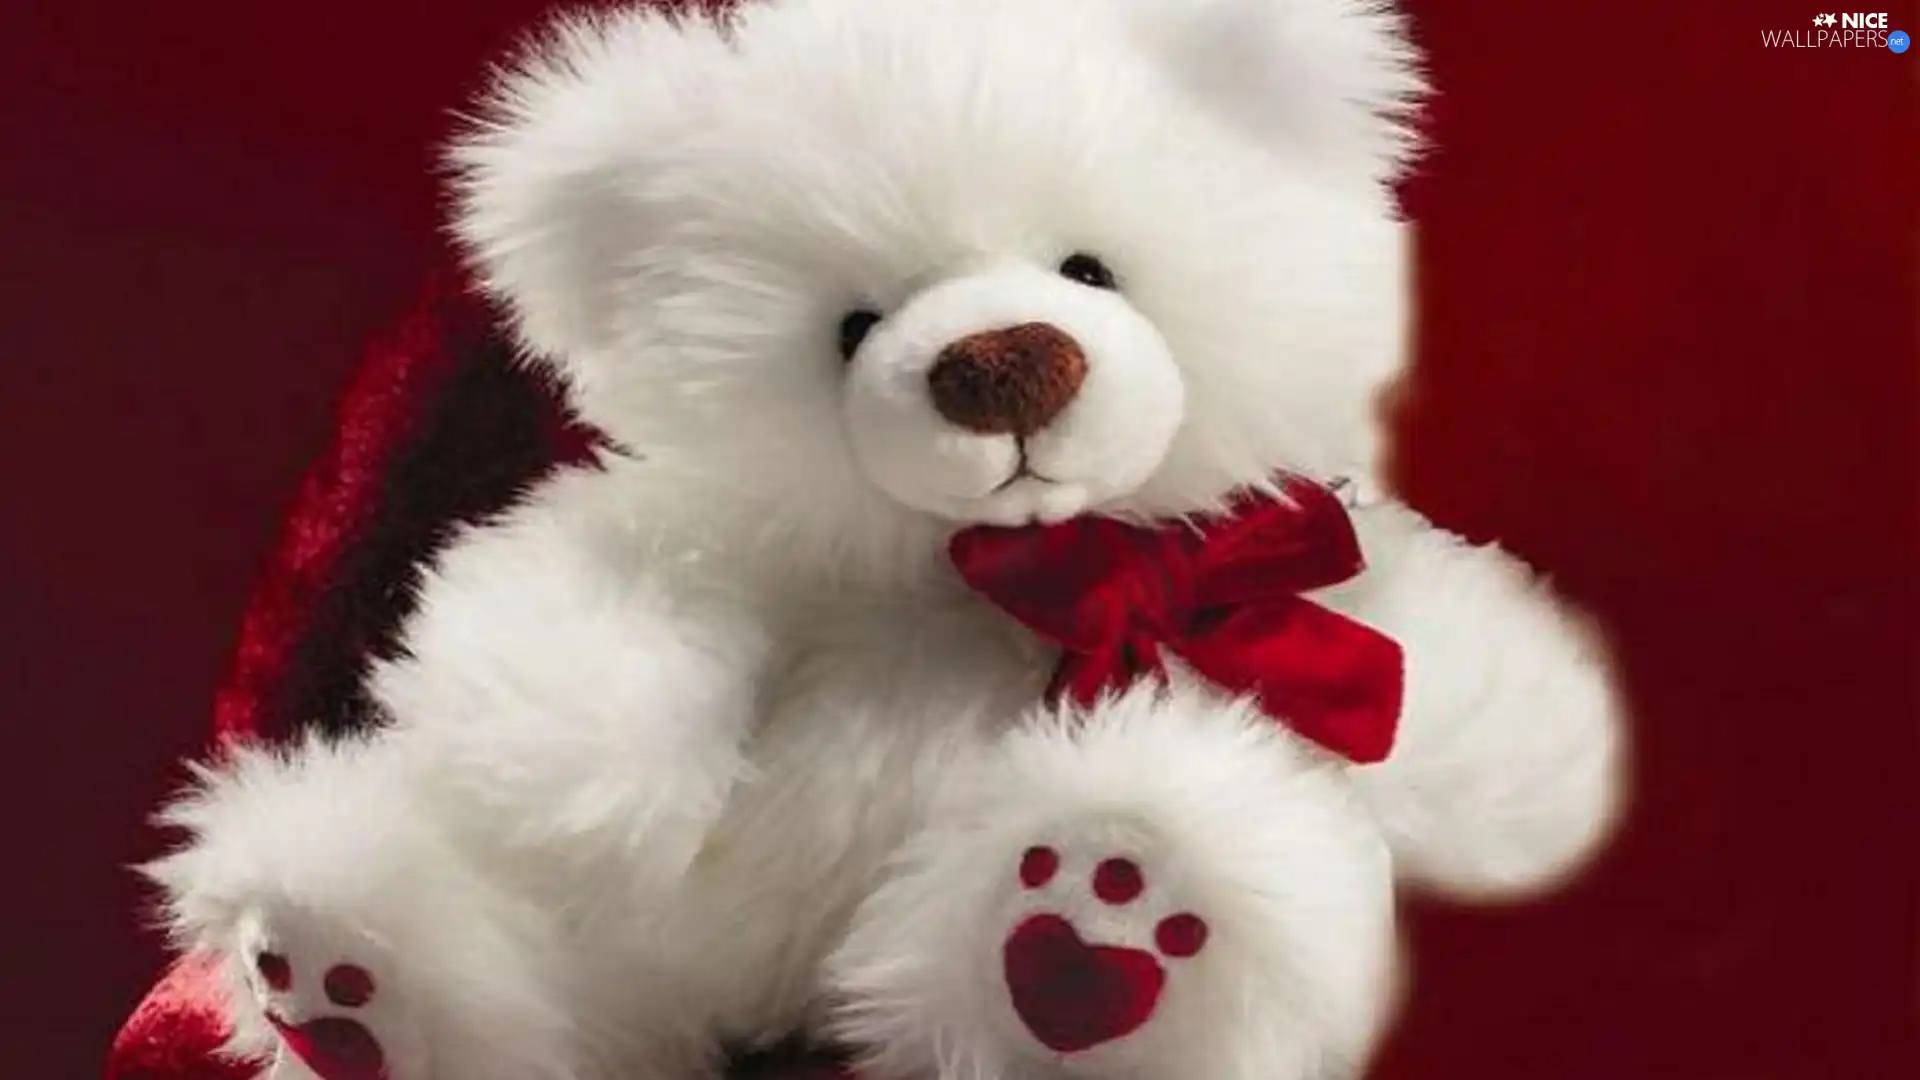 bow, White, teddy bear